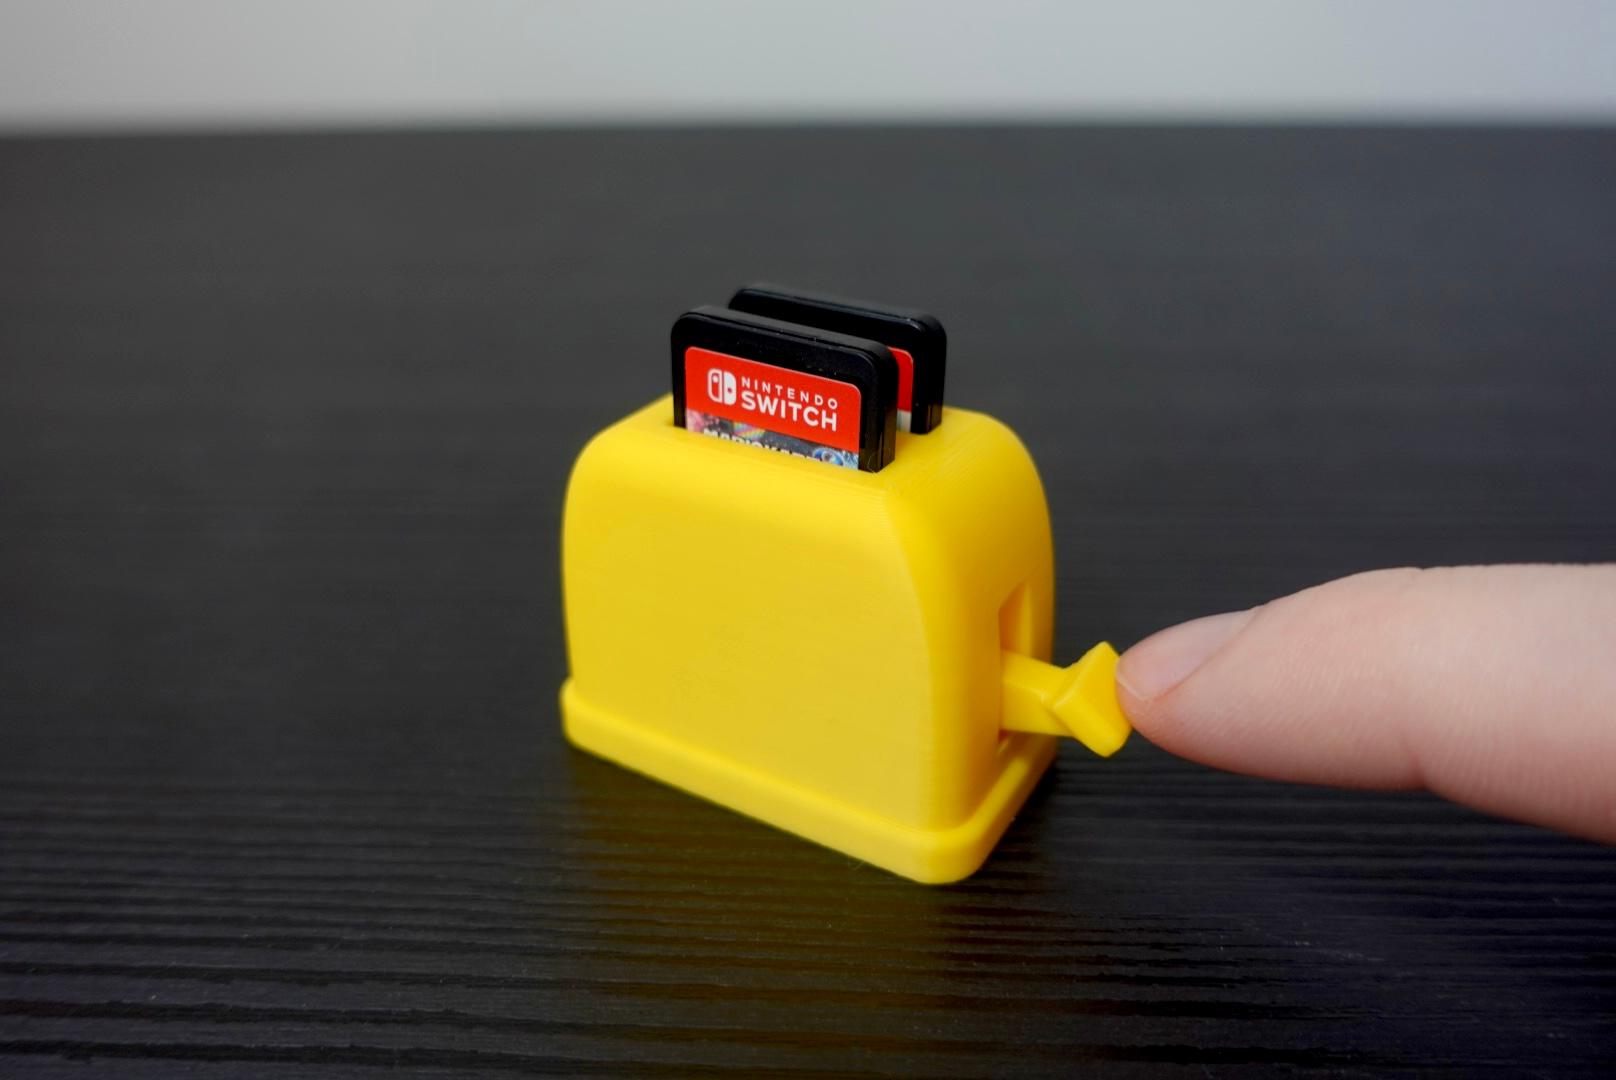 Mini Toaster (Nintendo Switch Games) 3d model